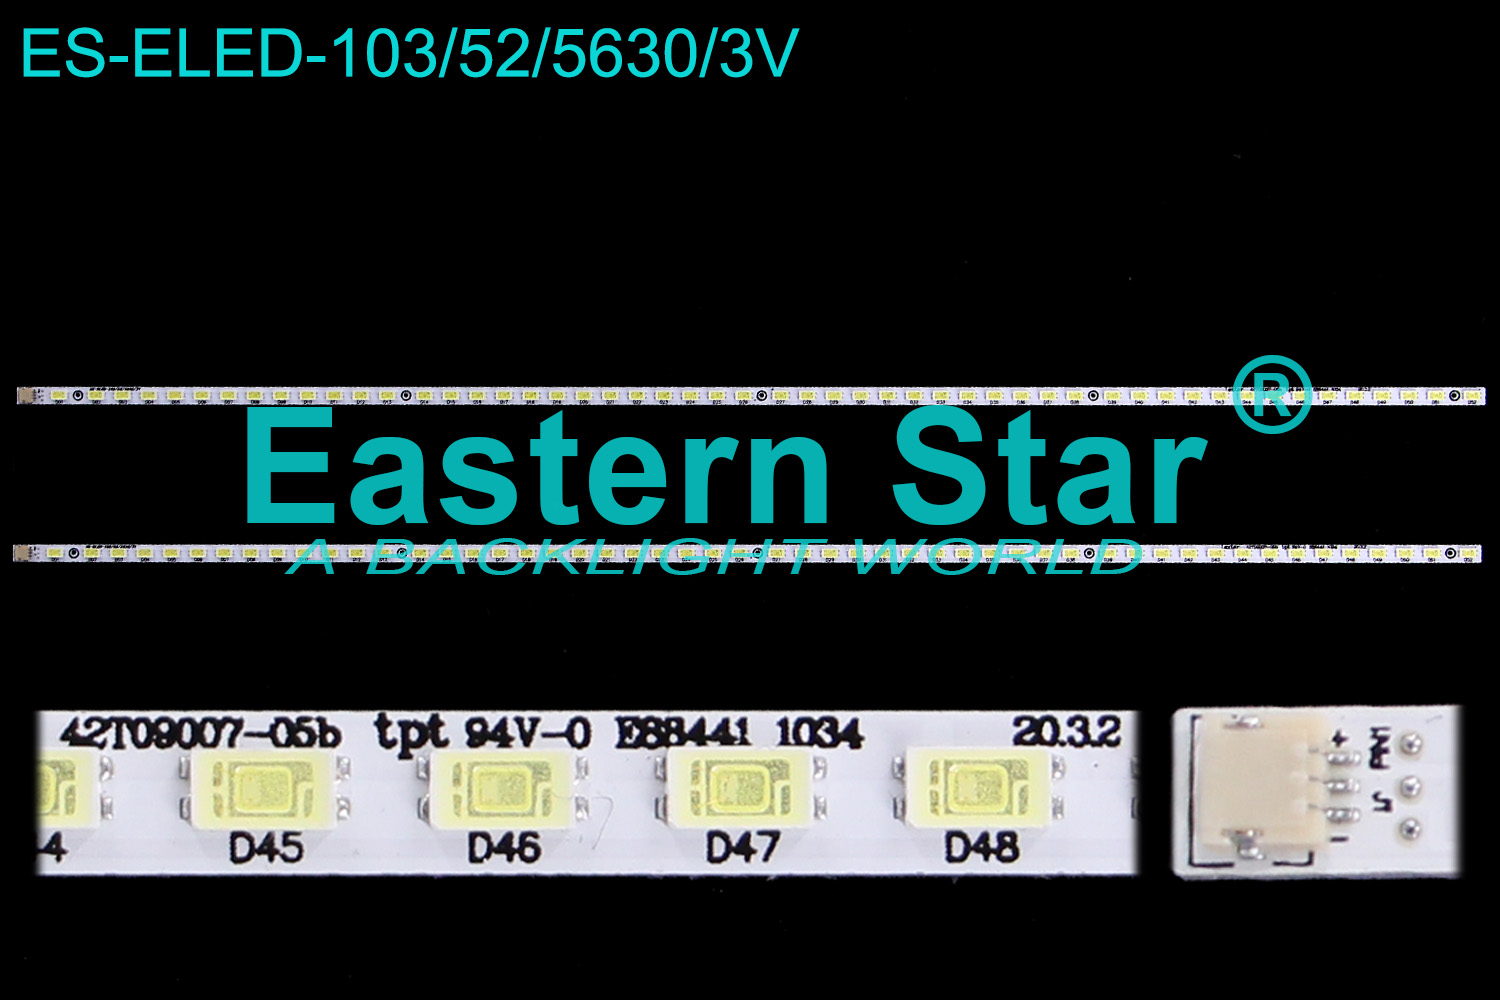 ES-ELED-103 ELED/EDGE TV backlight use for Lg/Hisense/Changhong 42'' 52LEDs  42T09-05b led strips(2/4)